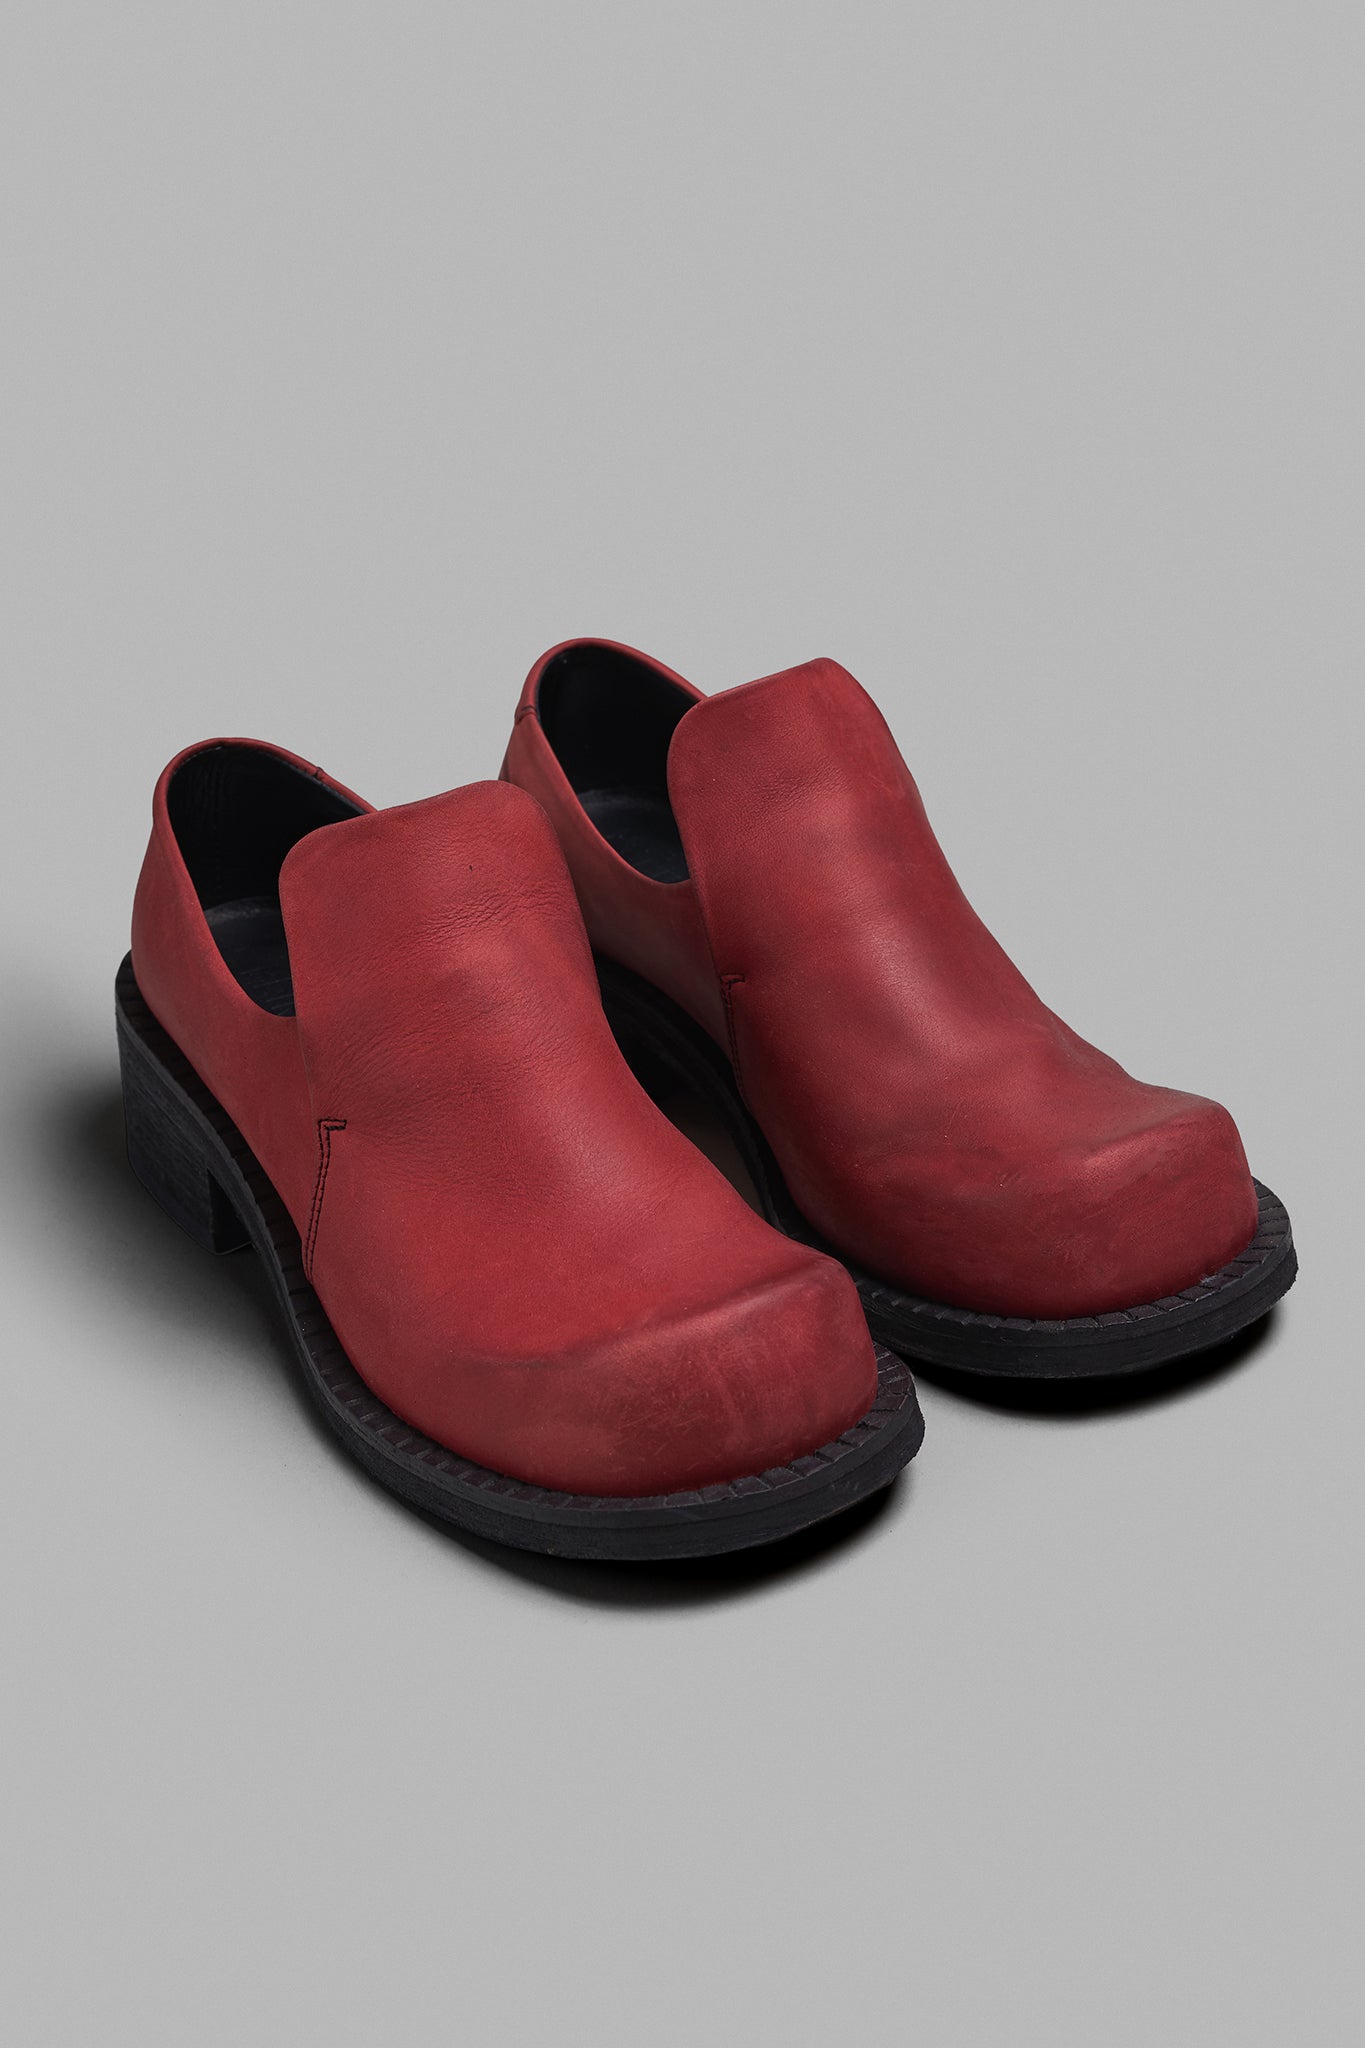 Wide Toe Loafer - Old Red